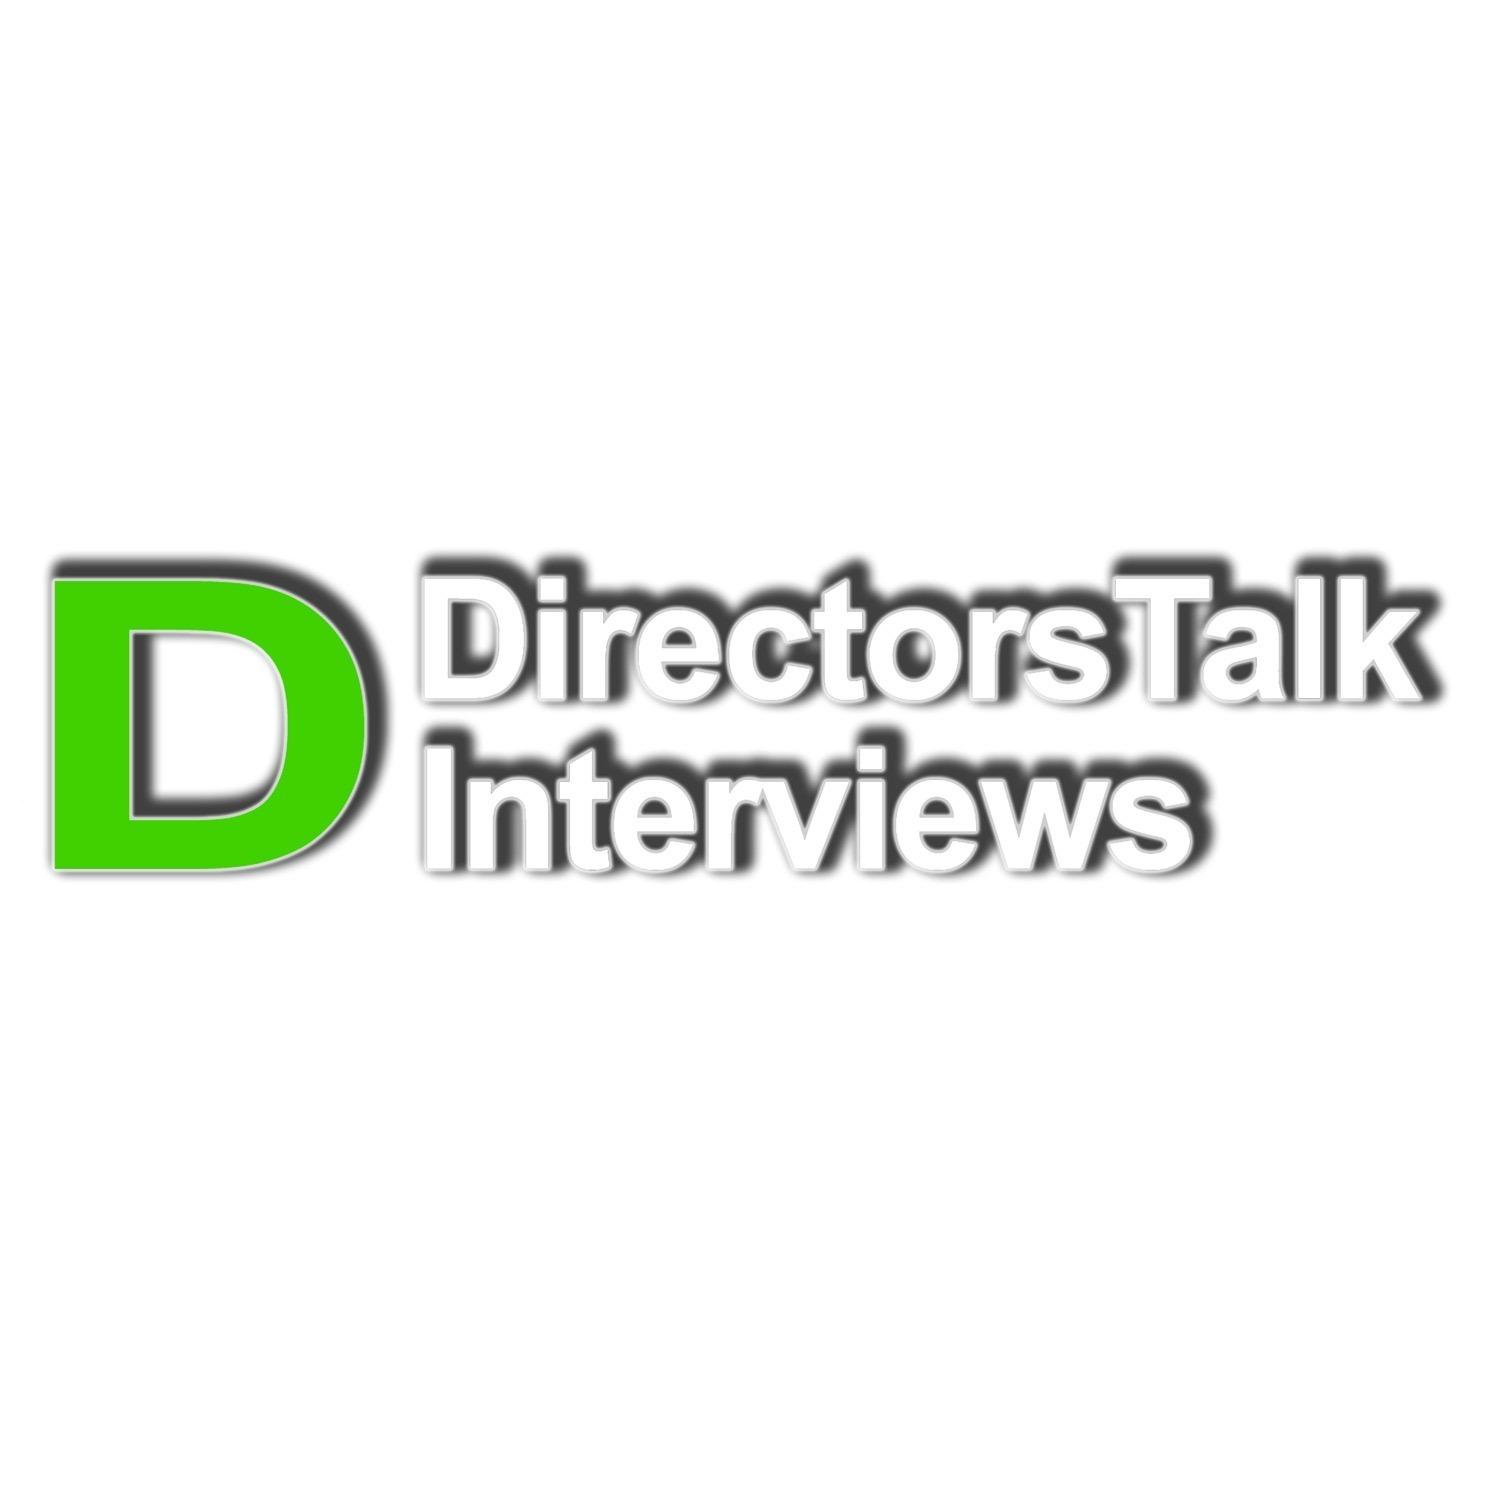 DirectorsTalk Interviews